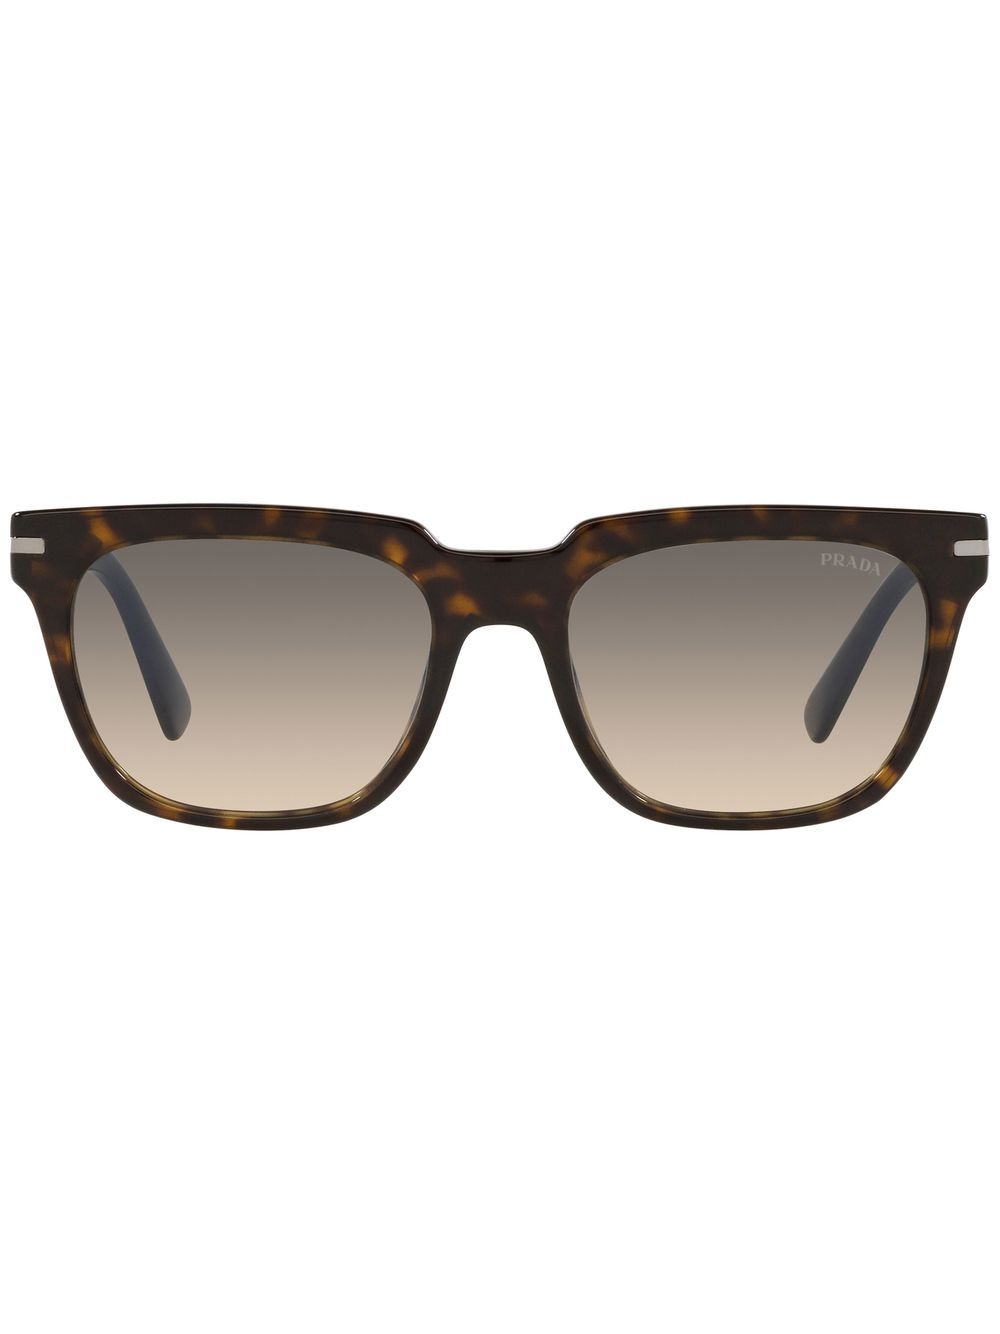 Prada Eyewear PR 04YS square-shape sunglasses - Green von Prada Eyewear